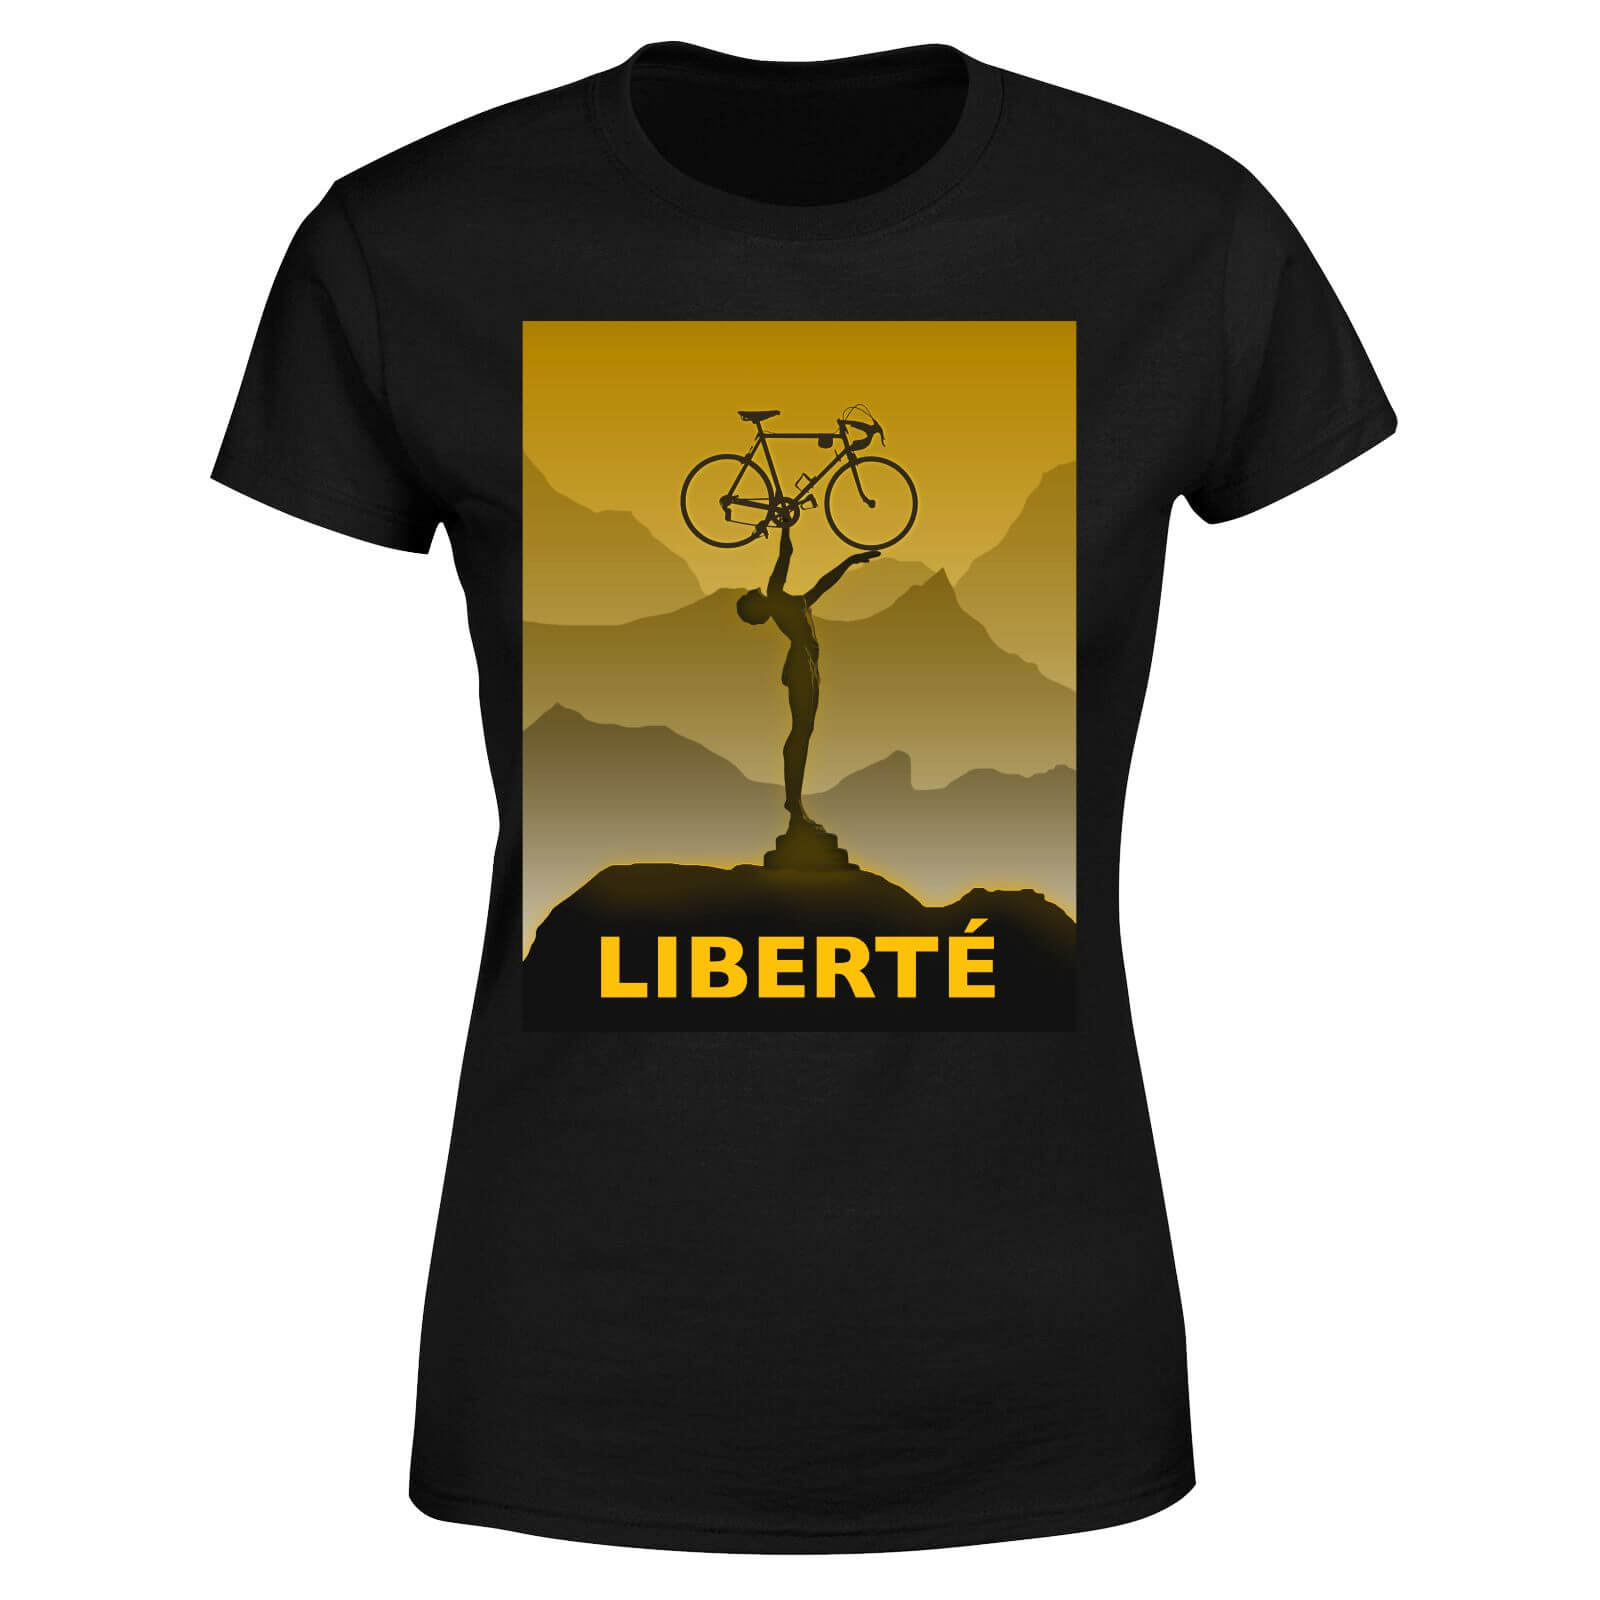 Liberte Women's T-Shirt - Black - XL - Black